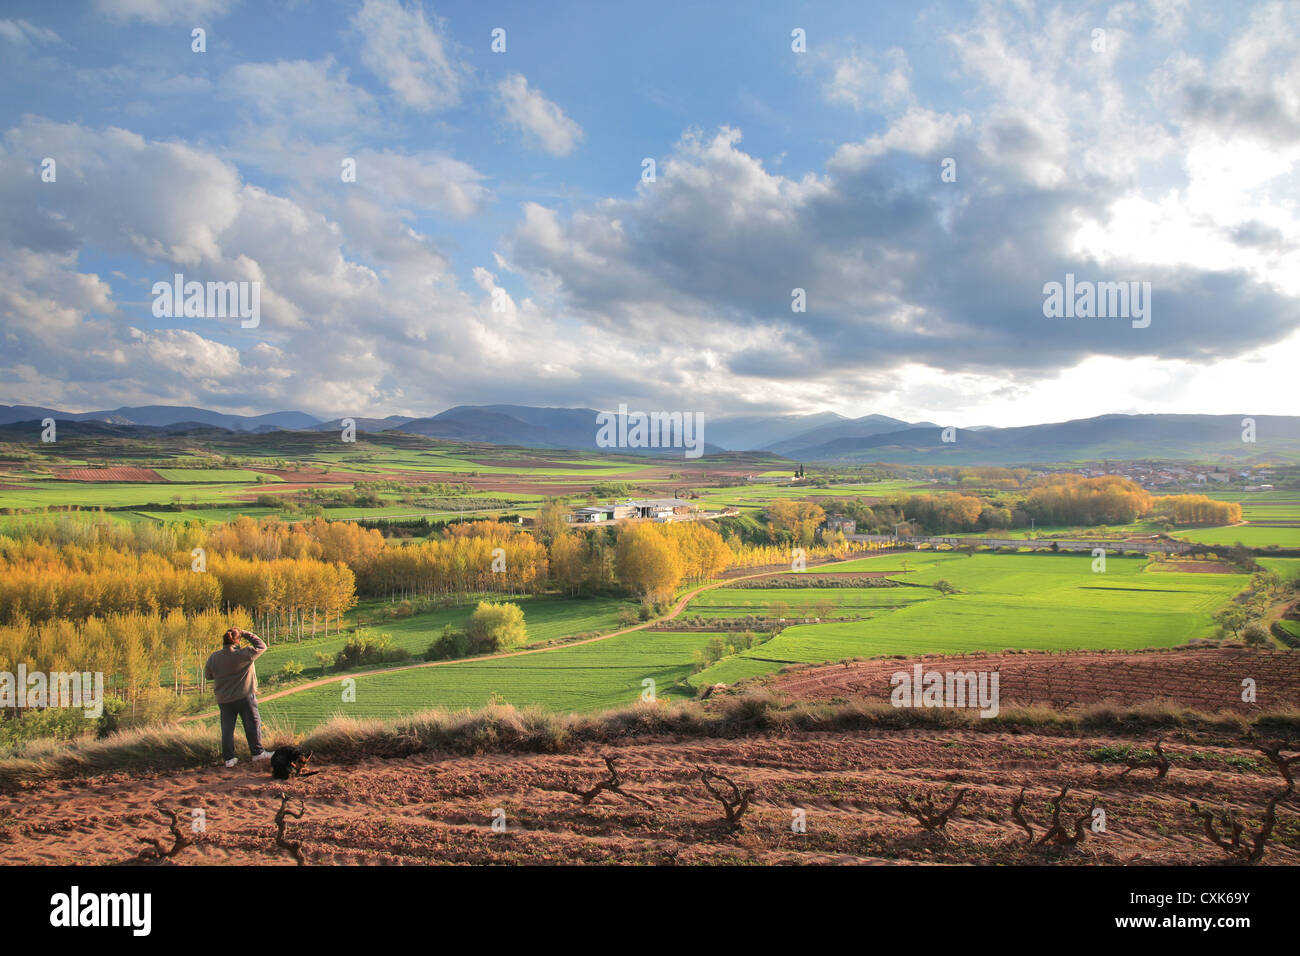 Cardenas valley, San Millan de la Cogolla, Badaran, Rioja wine region, Spain, Europe, Mediterranean, Stock Photo